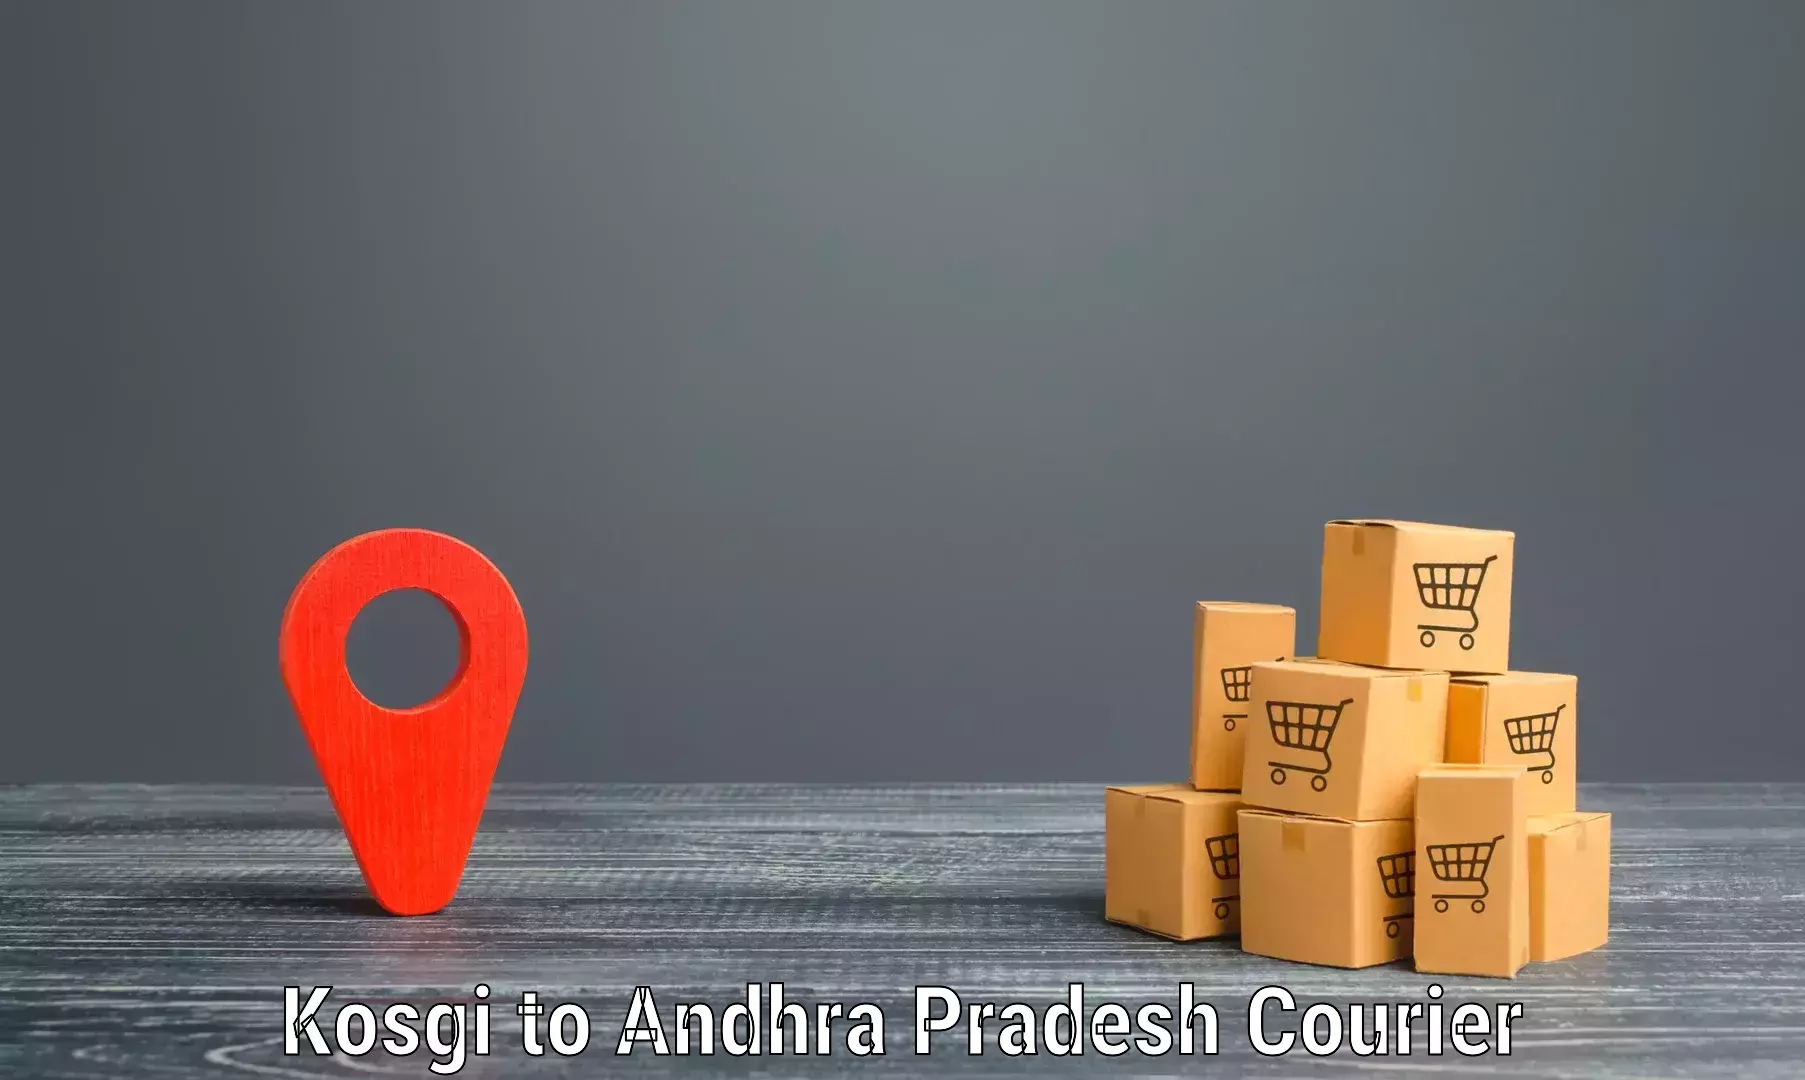 State-of-the-art courier technology Kosgi to Puttur Tirupati